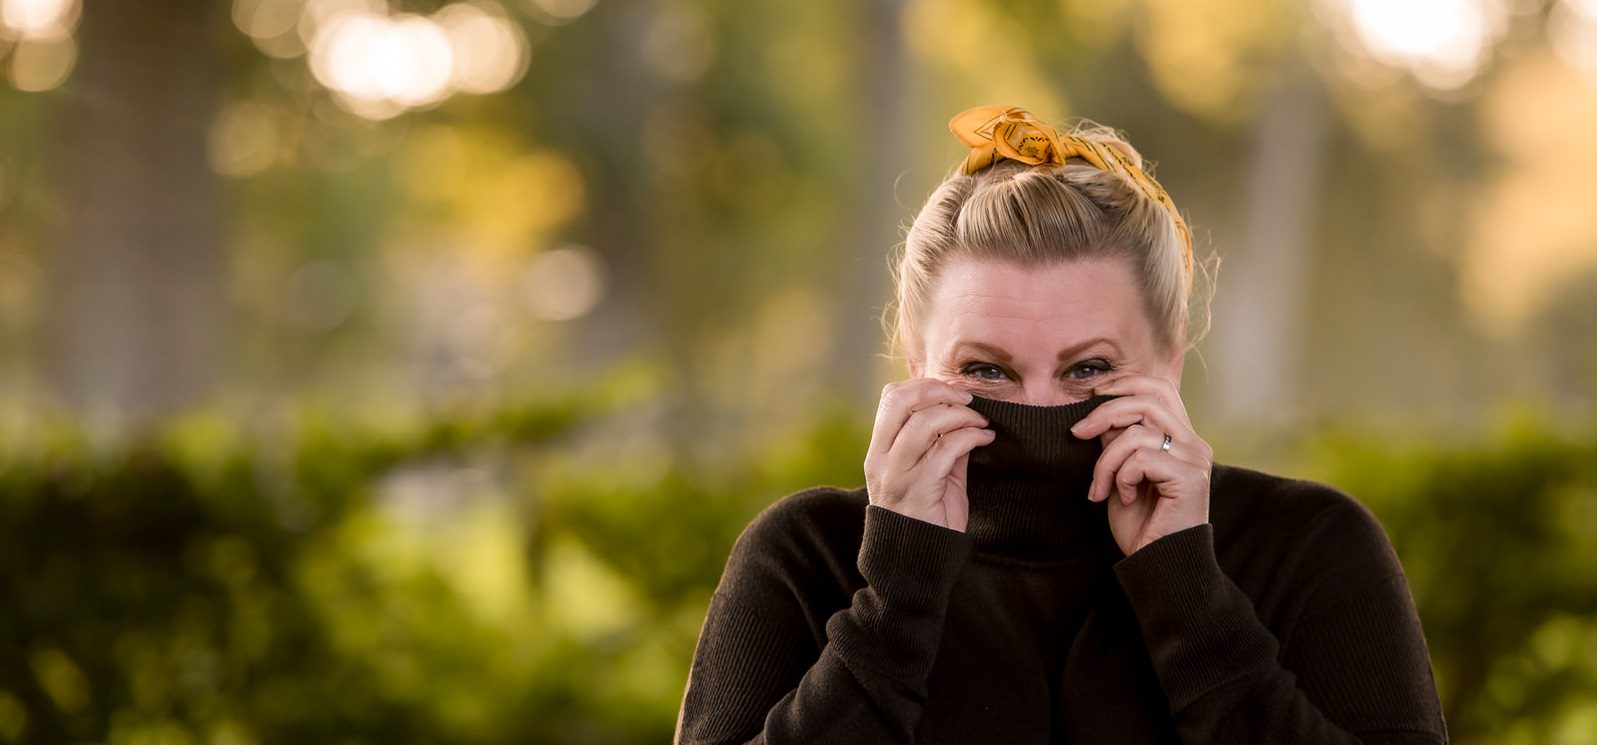 Personal Branding Photographer Edinburgh Woman hiding face